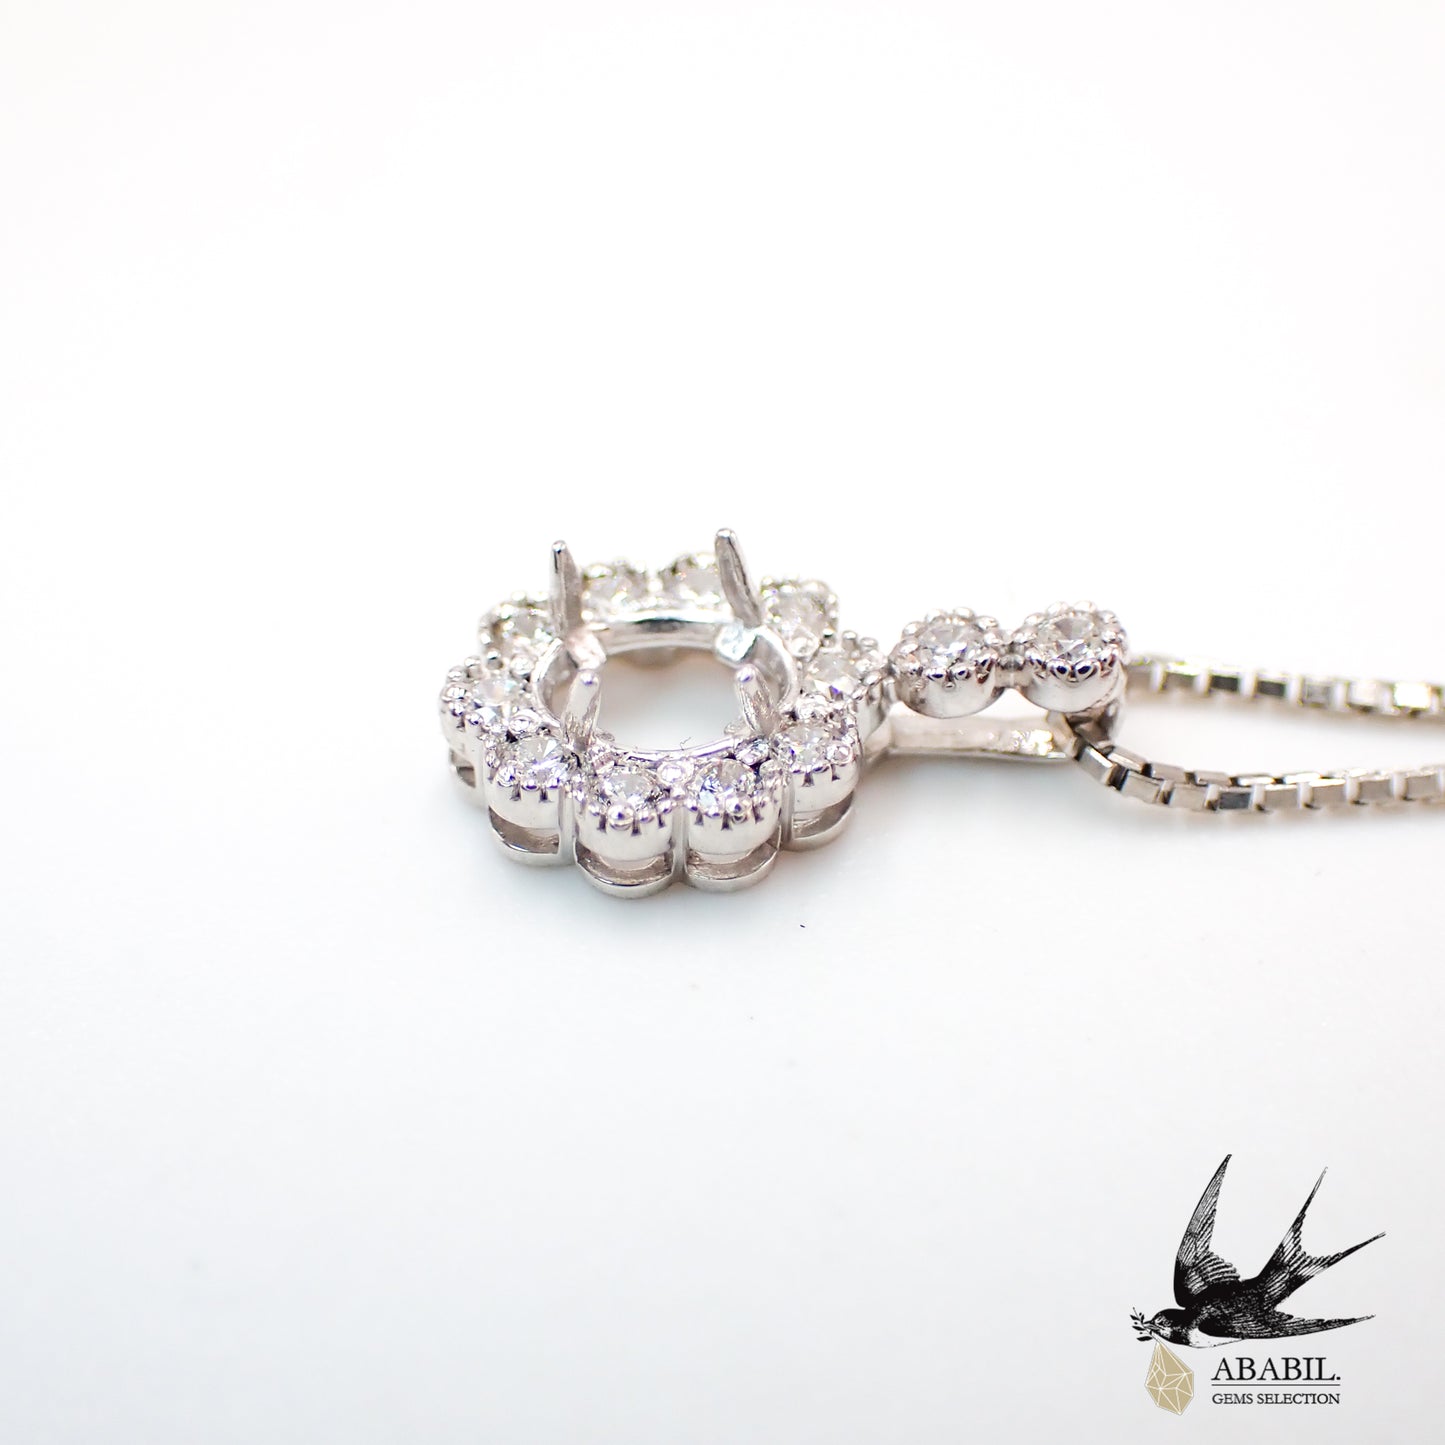 [Empty frame for custom-made jewelry/pendant top] PTWK06